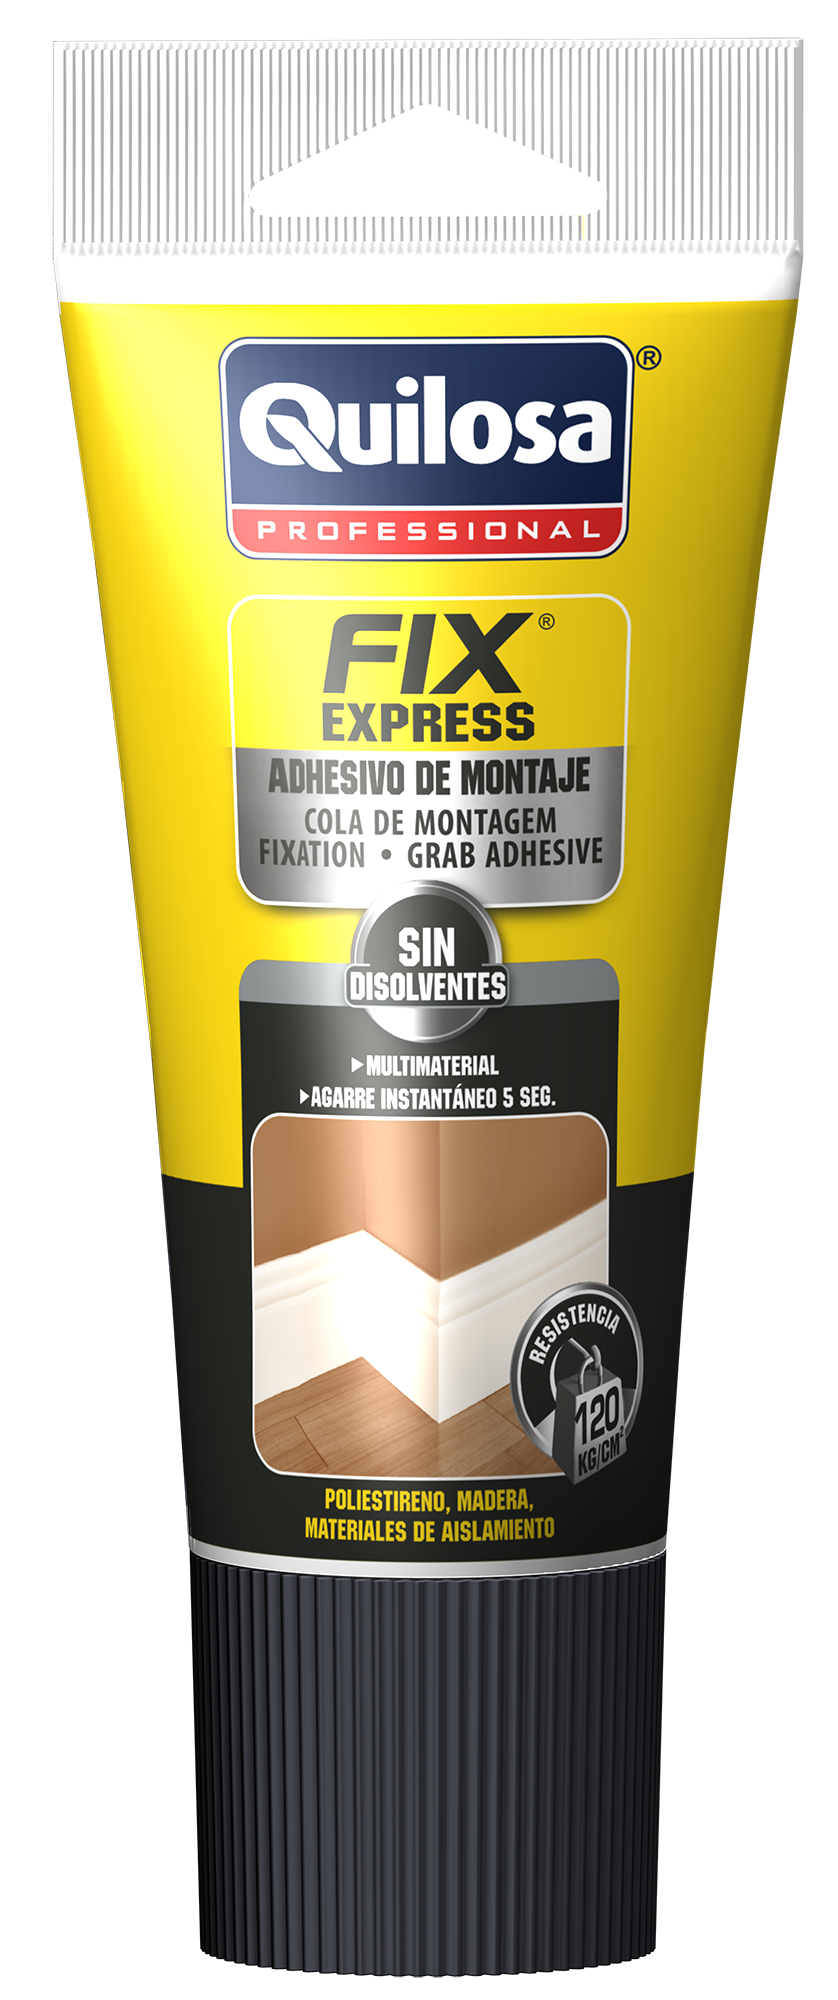 FIX Express Adhesivo de Montaje - Quilosa